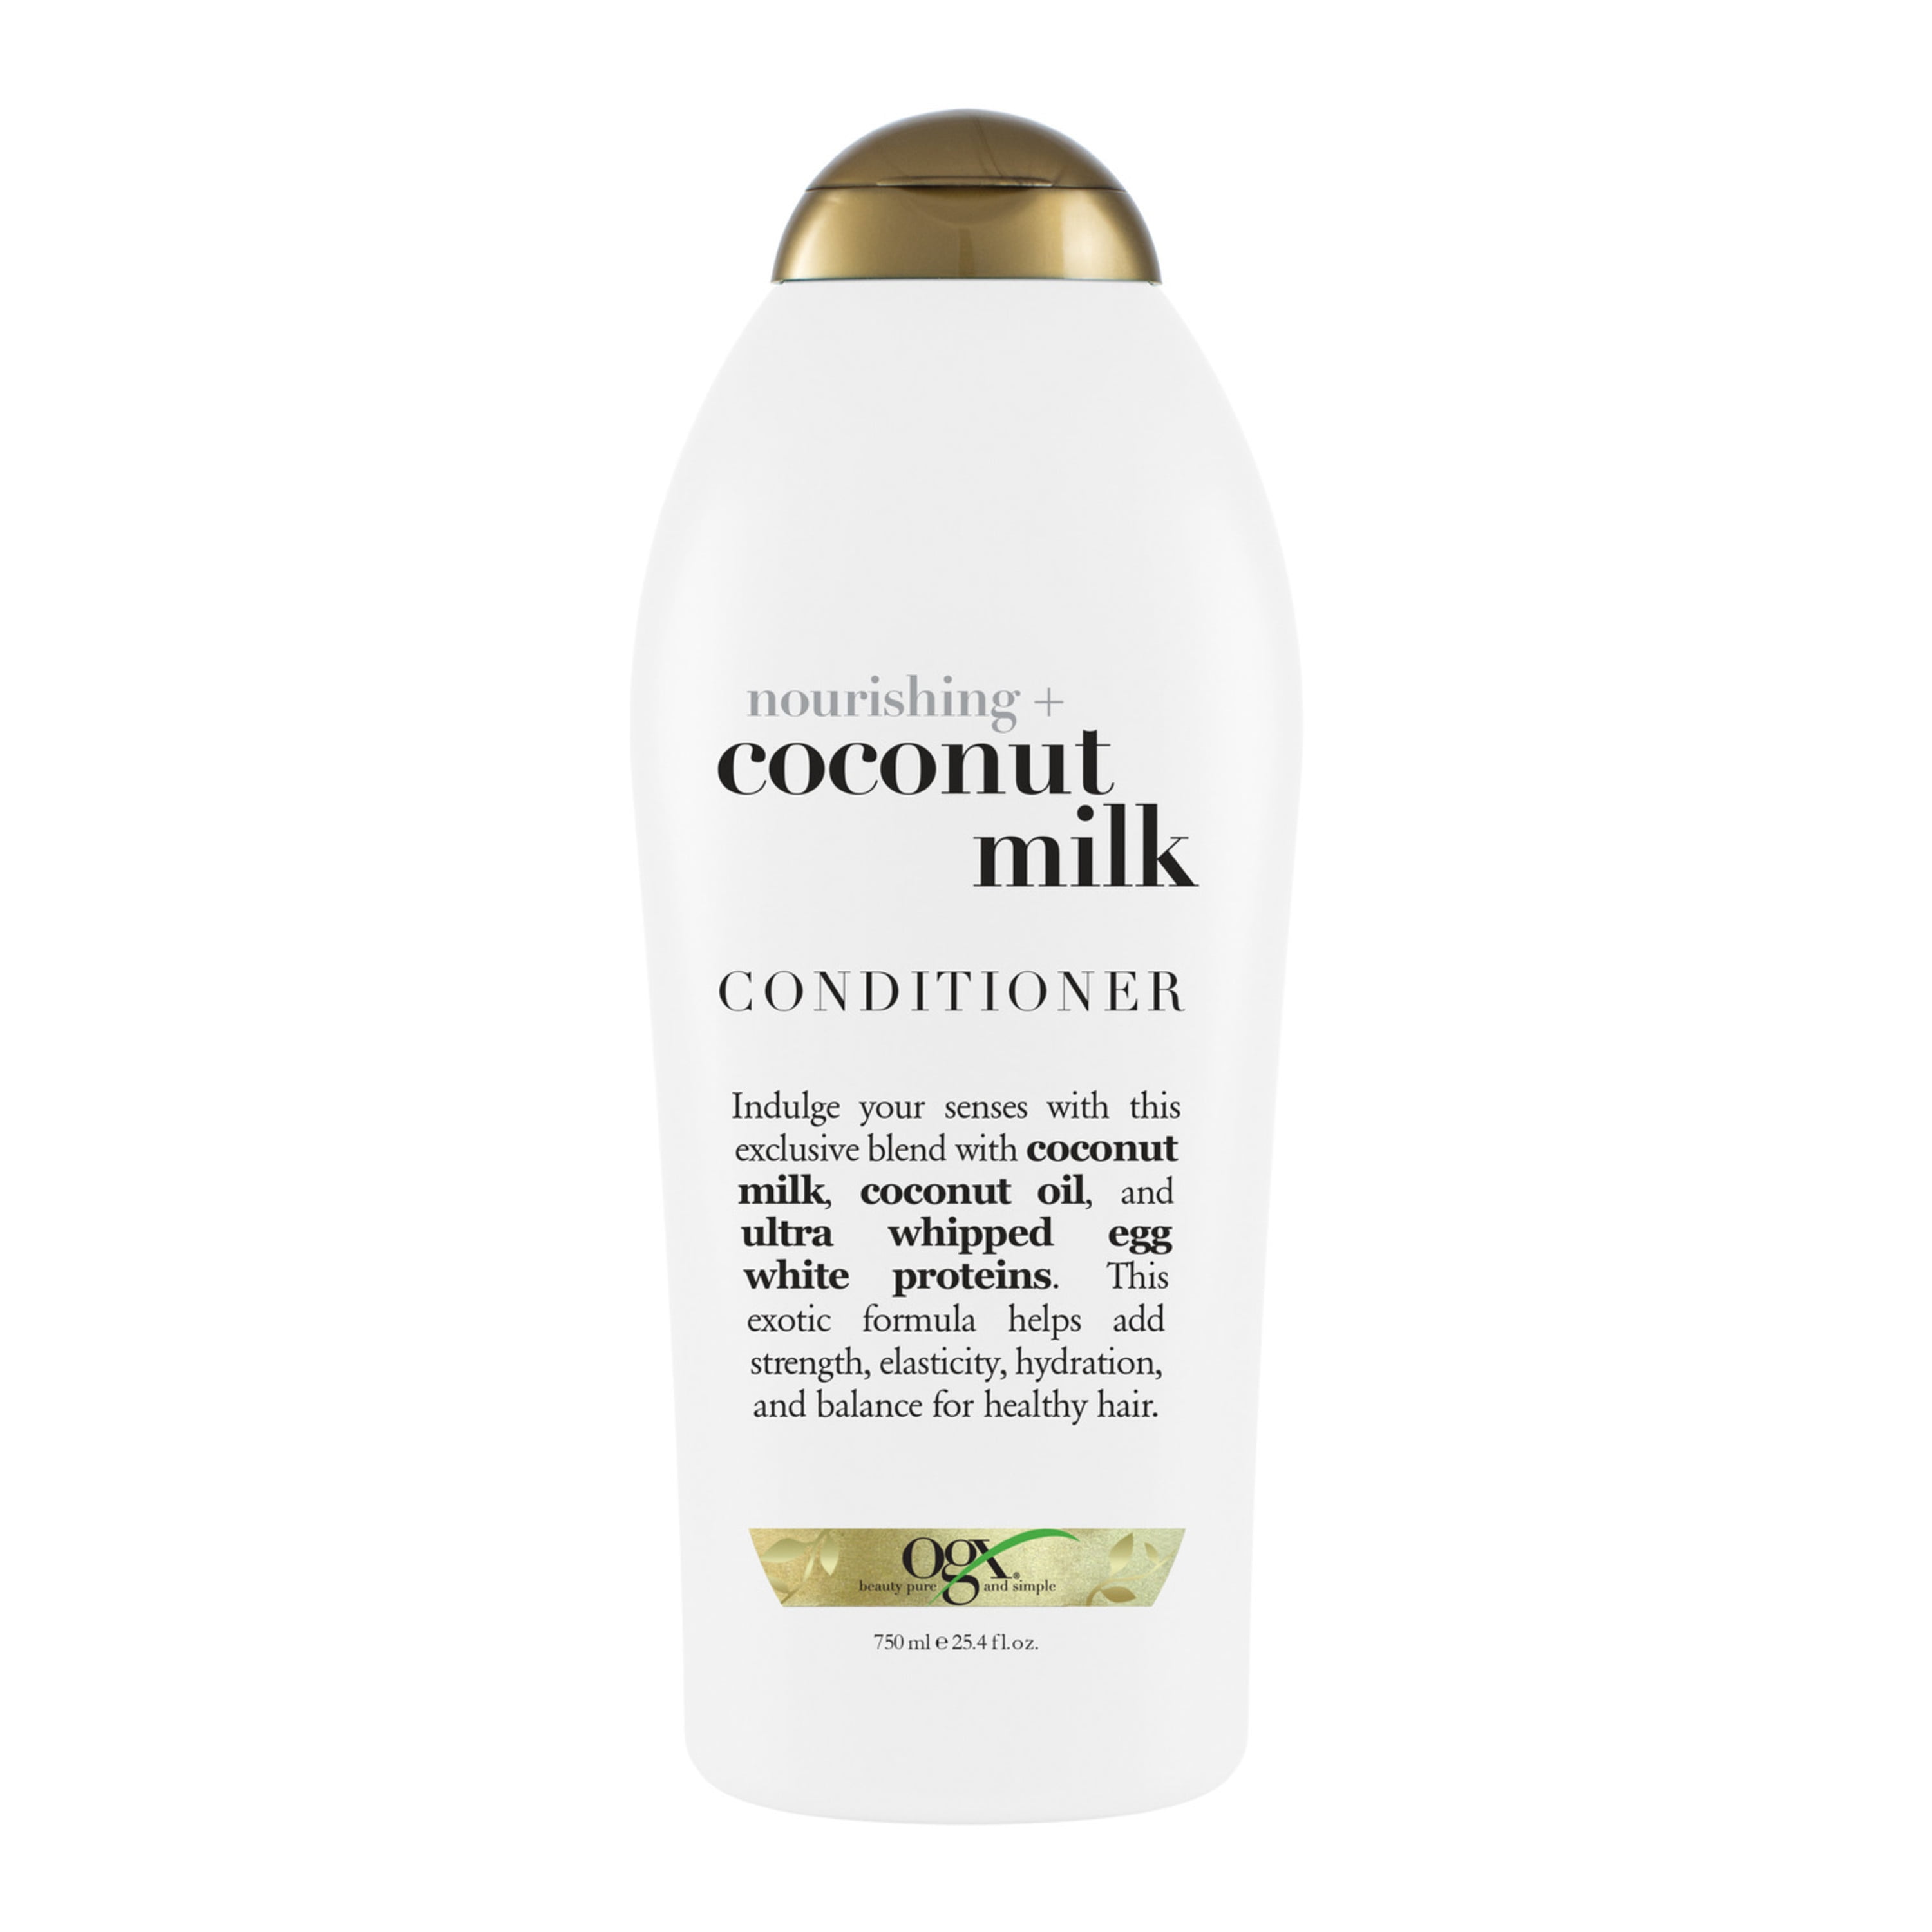 OGX Nourishing + Coconut Milk Moisturizing Daily Conditioner with Egg White Protein, 25.4 fl oz